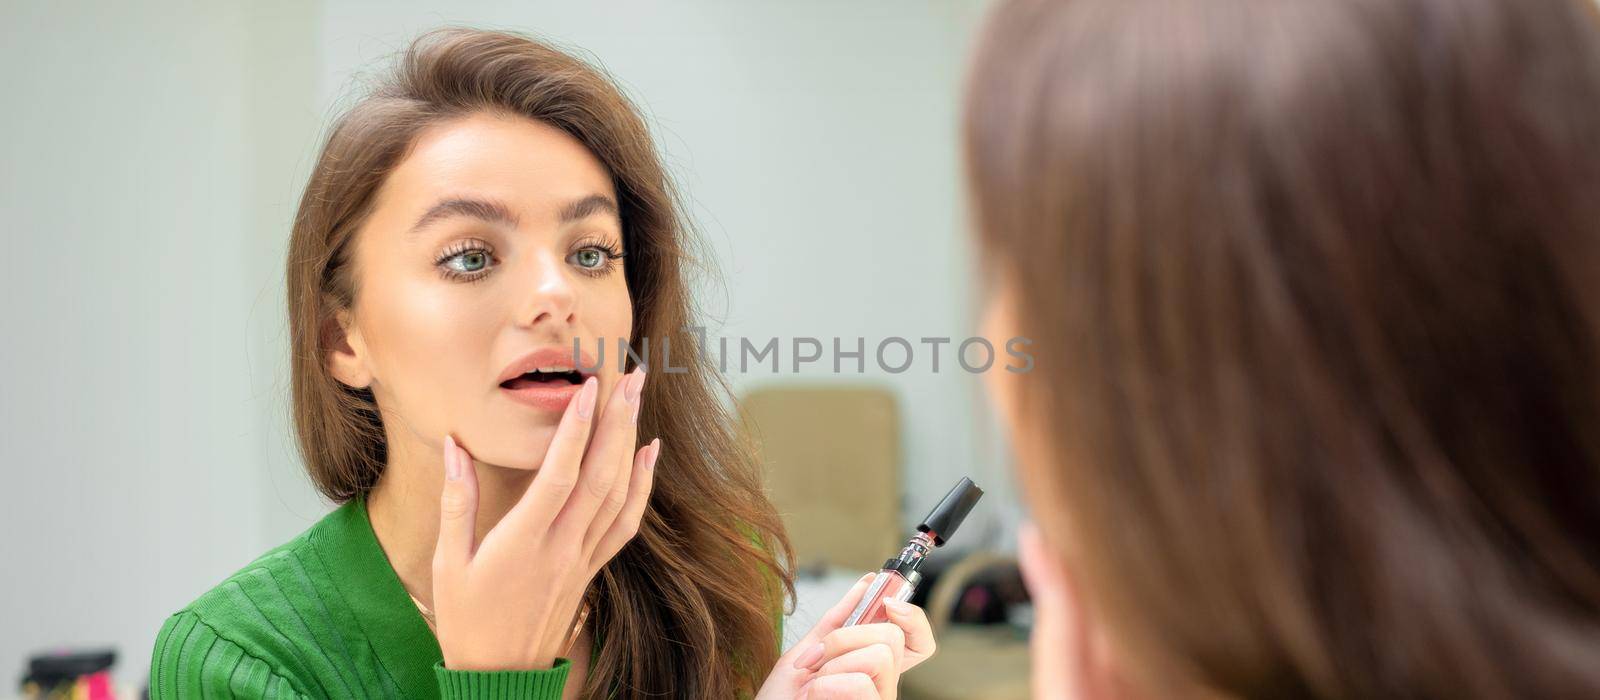 Woman applies lipstick on her lips by okskukuruza